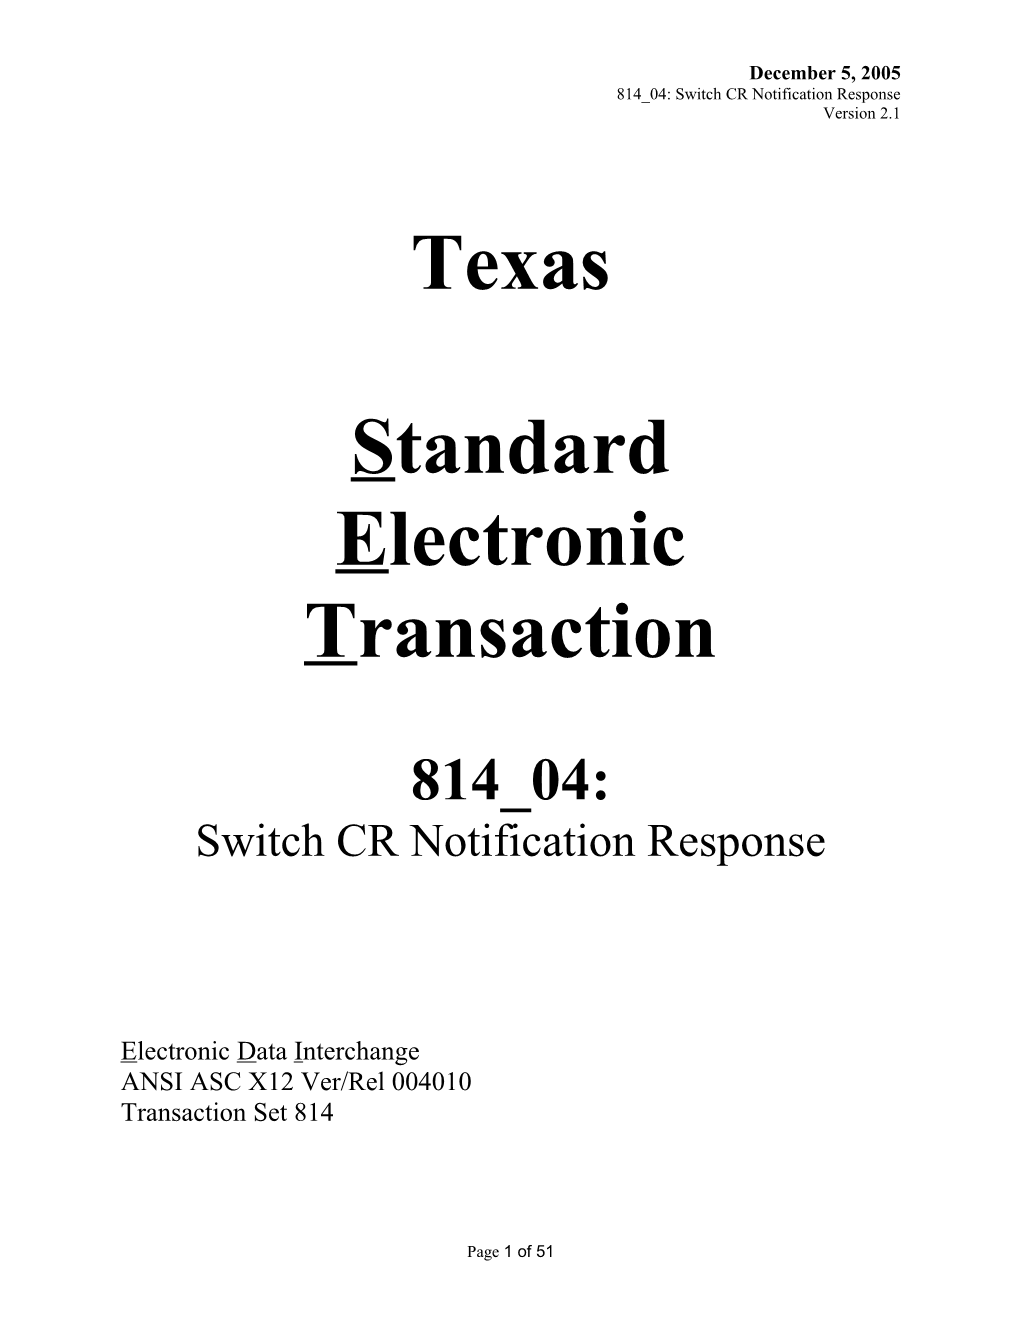 Switch CR Notification Response